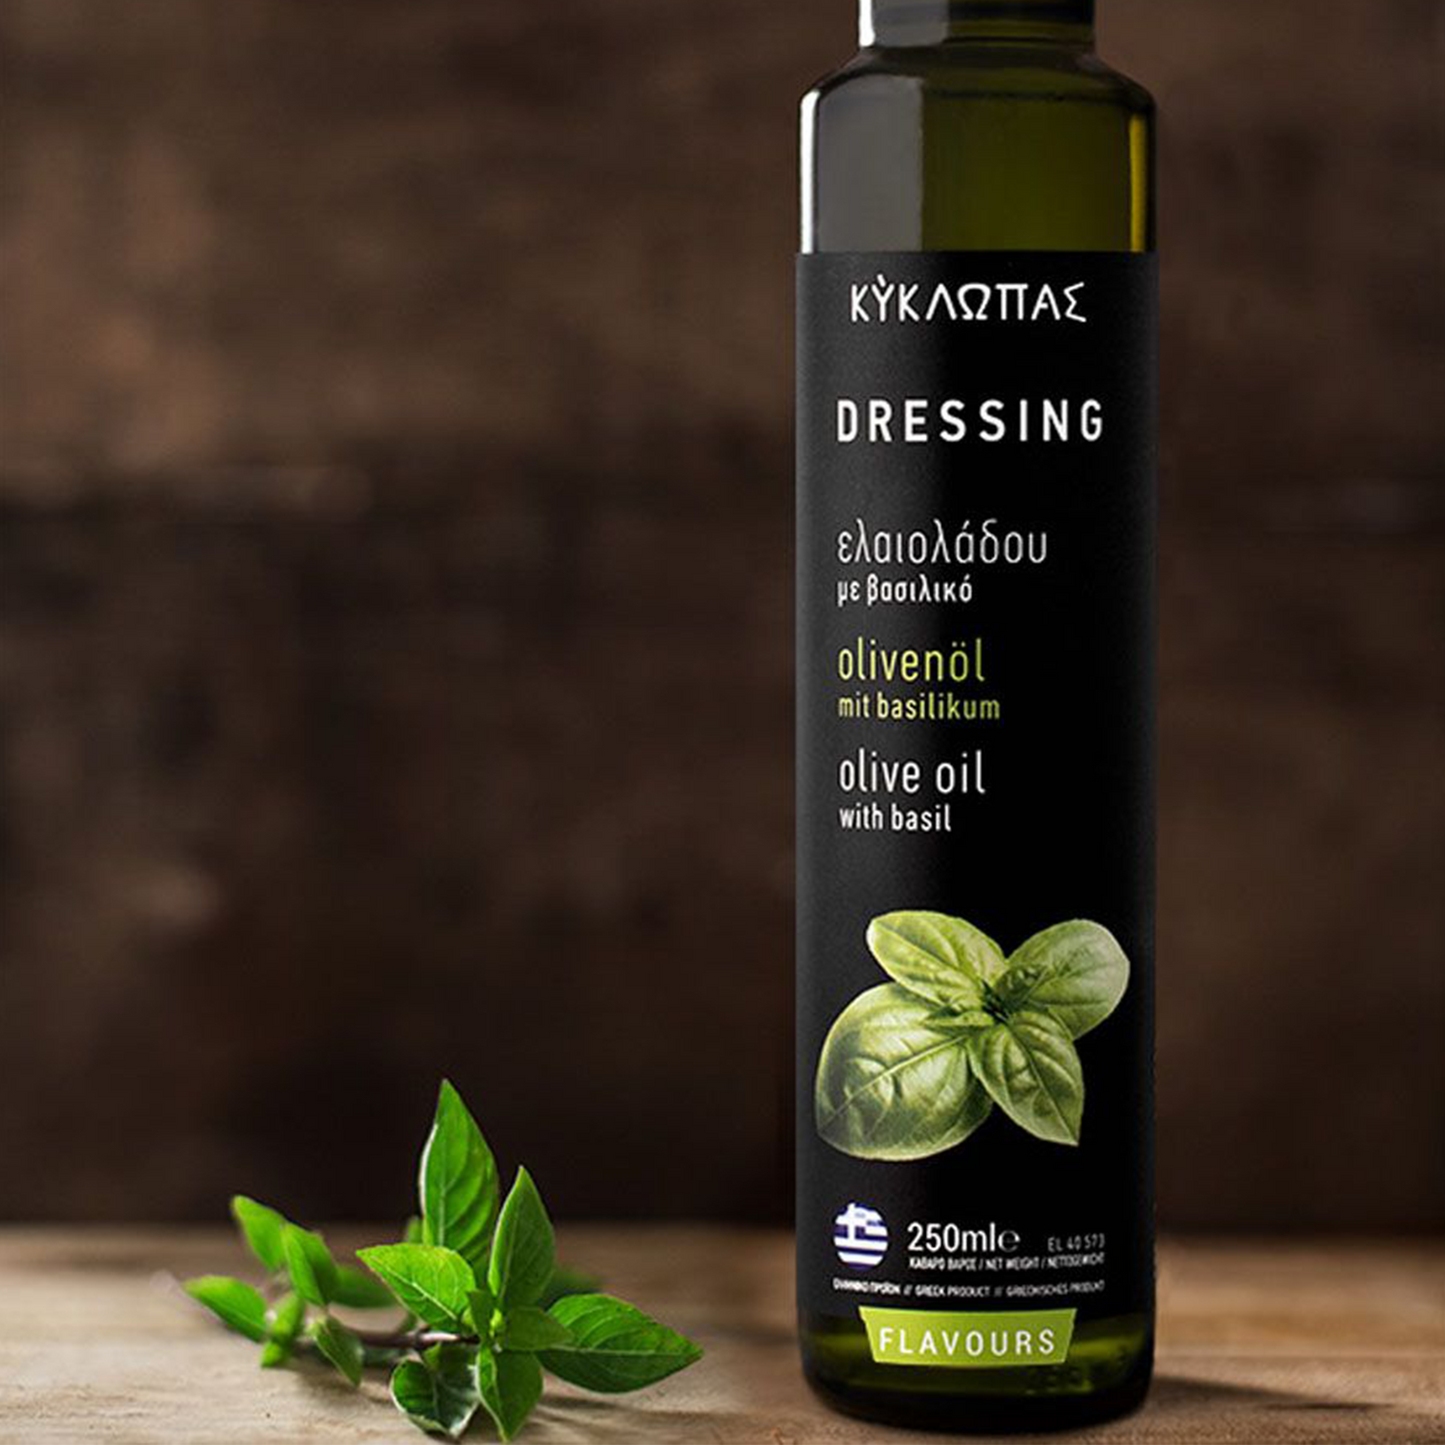 Kyklopas Premium Olivenöl Dressing mit Basilikum 250ml